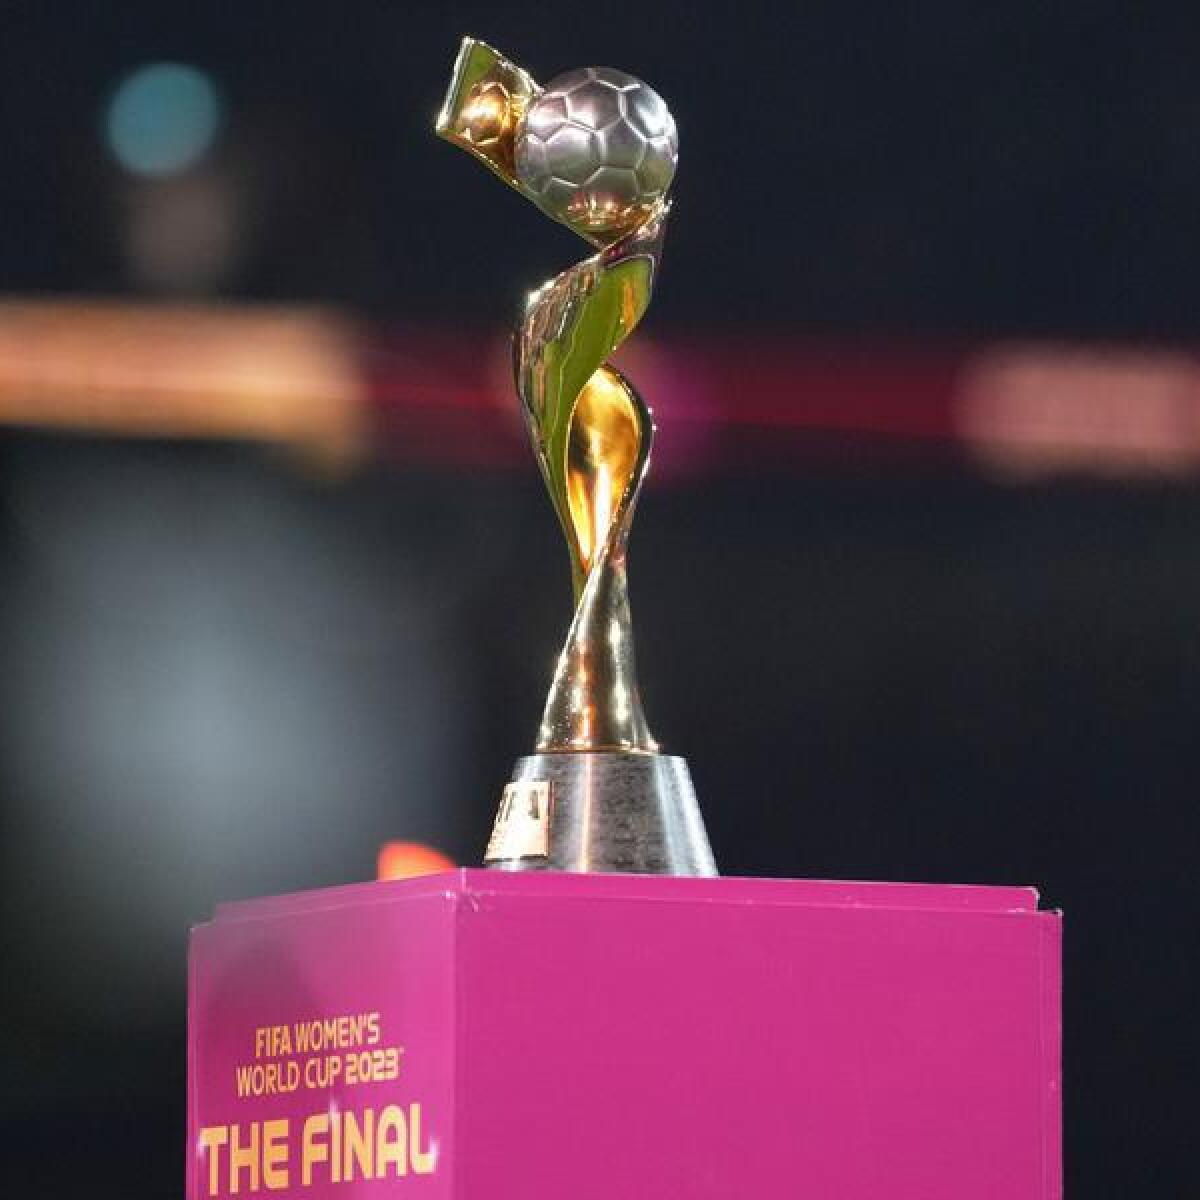 Women's World Cup soccer trophy.